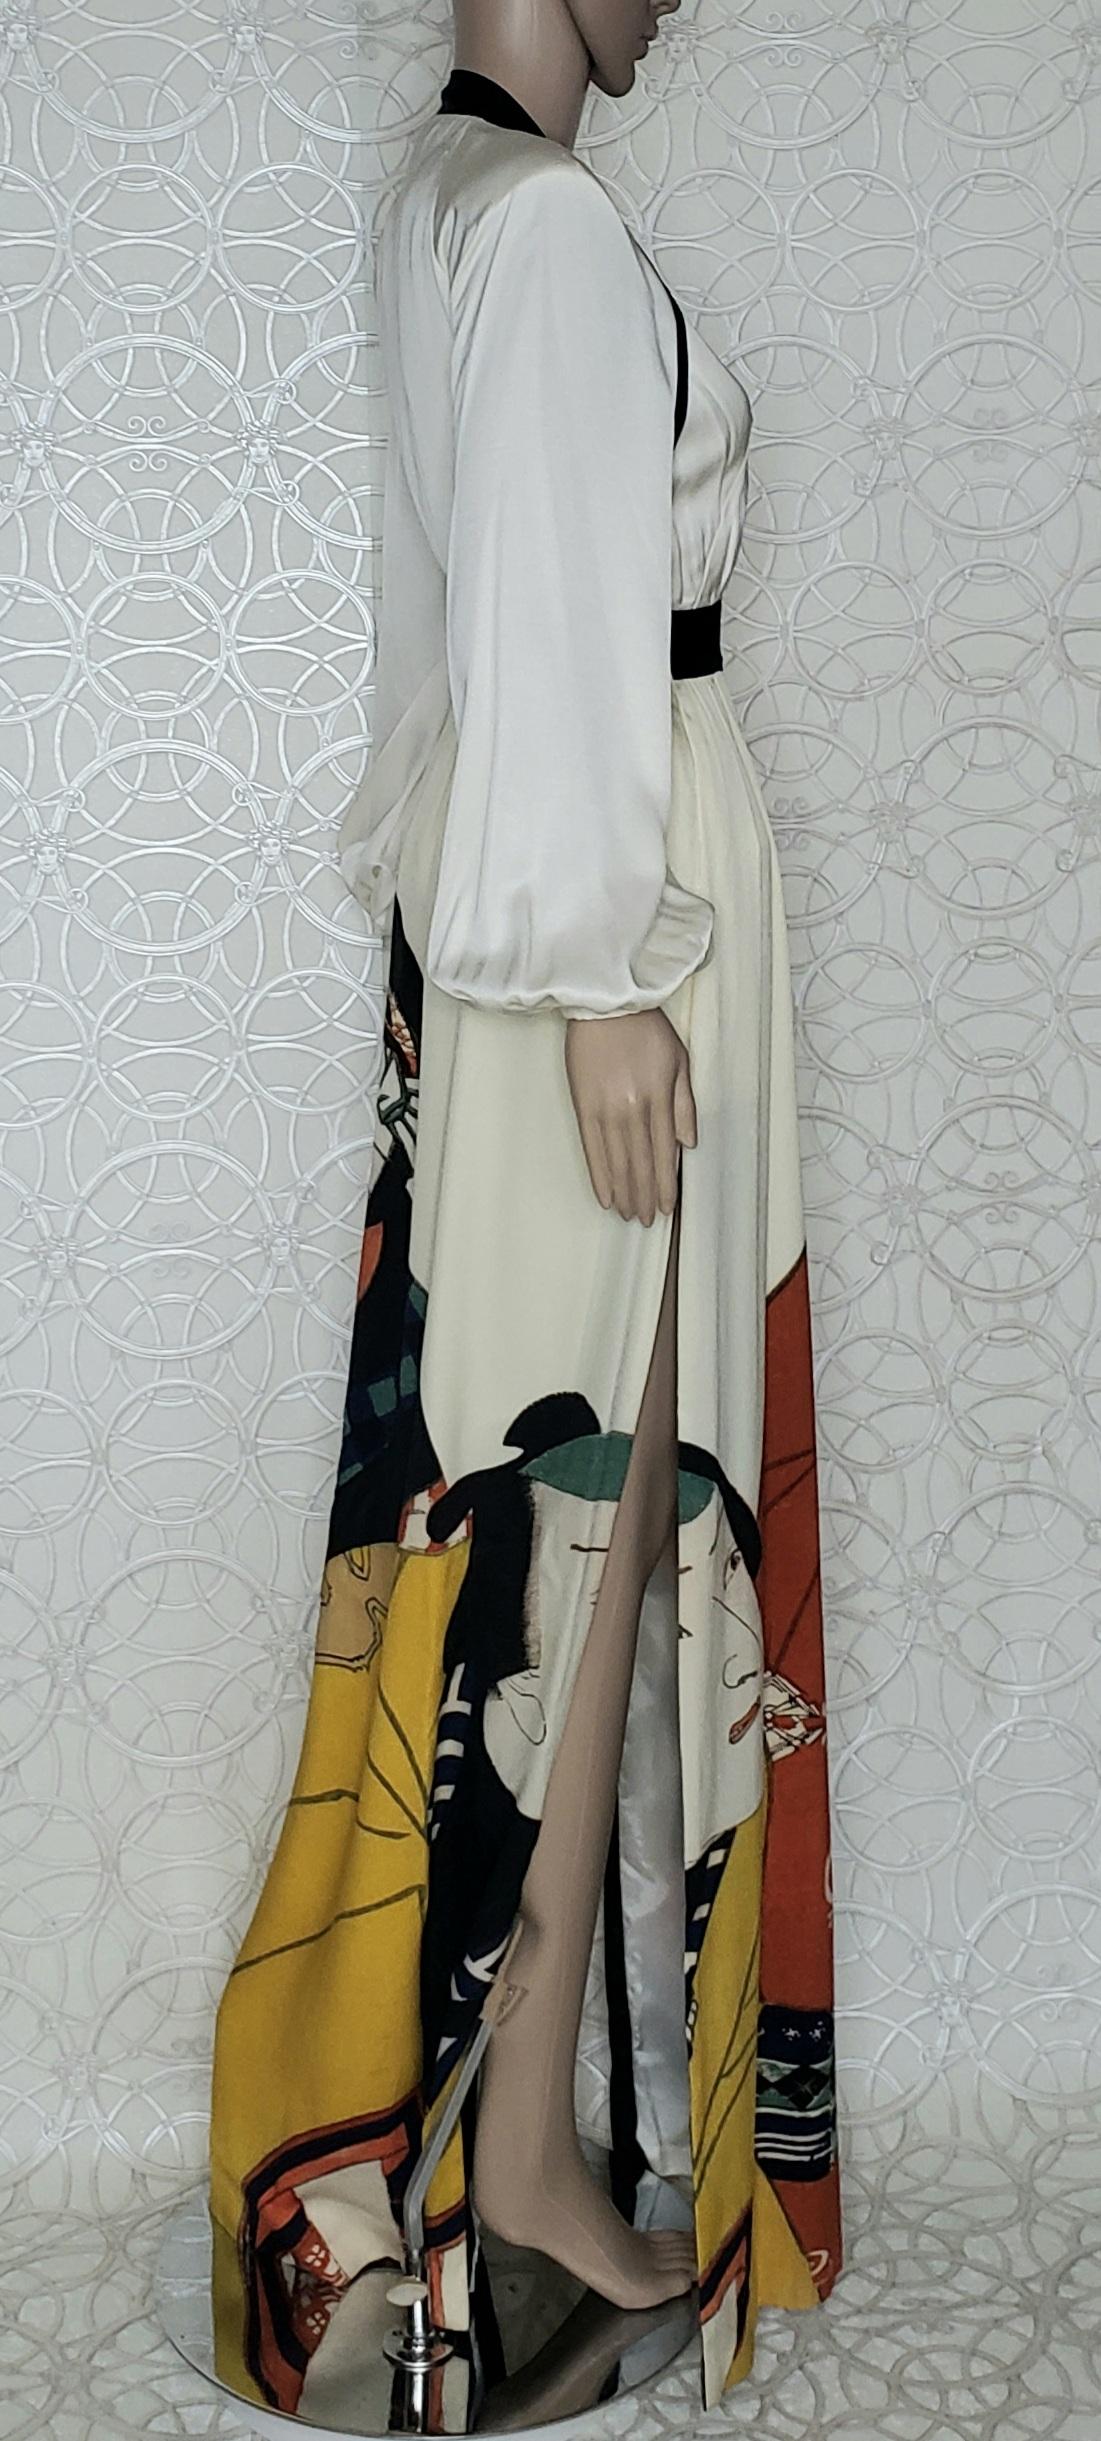 Women's DRIES Van NOTEN Fall 2012 SILK DRESS size 36 - S For Sale